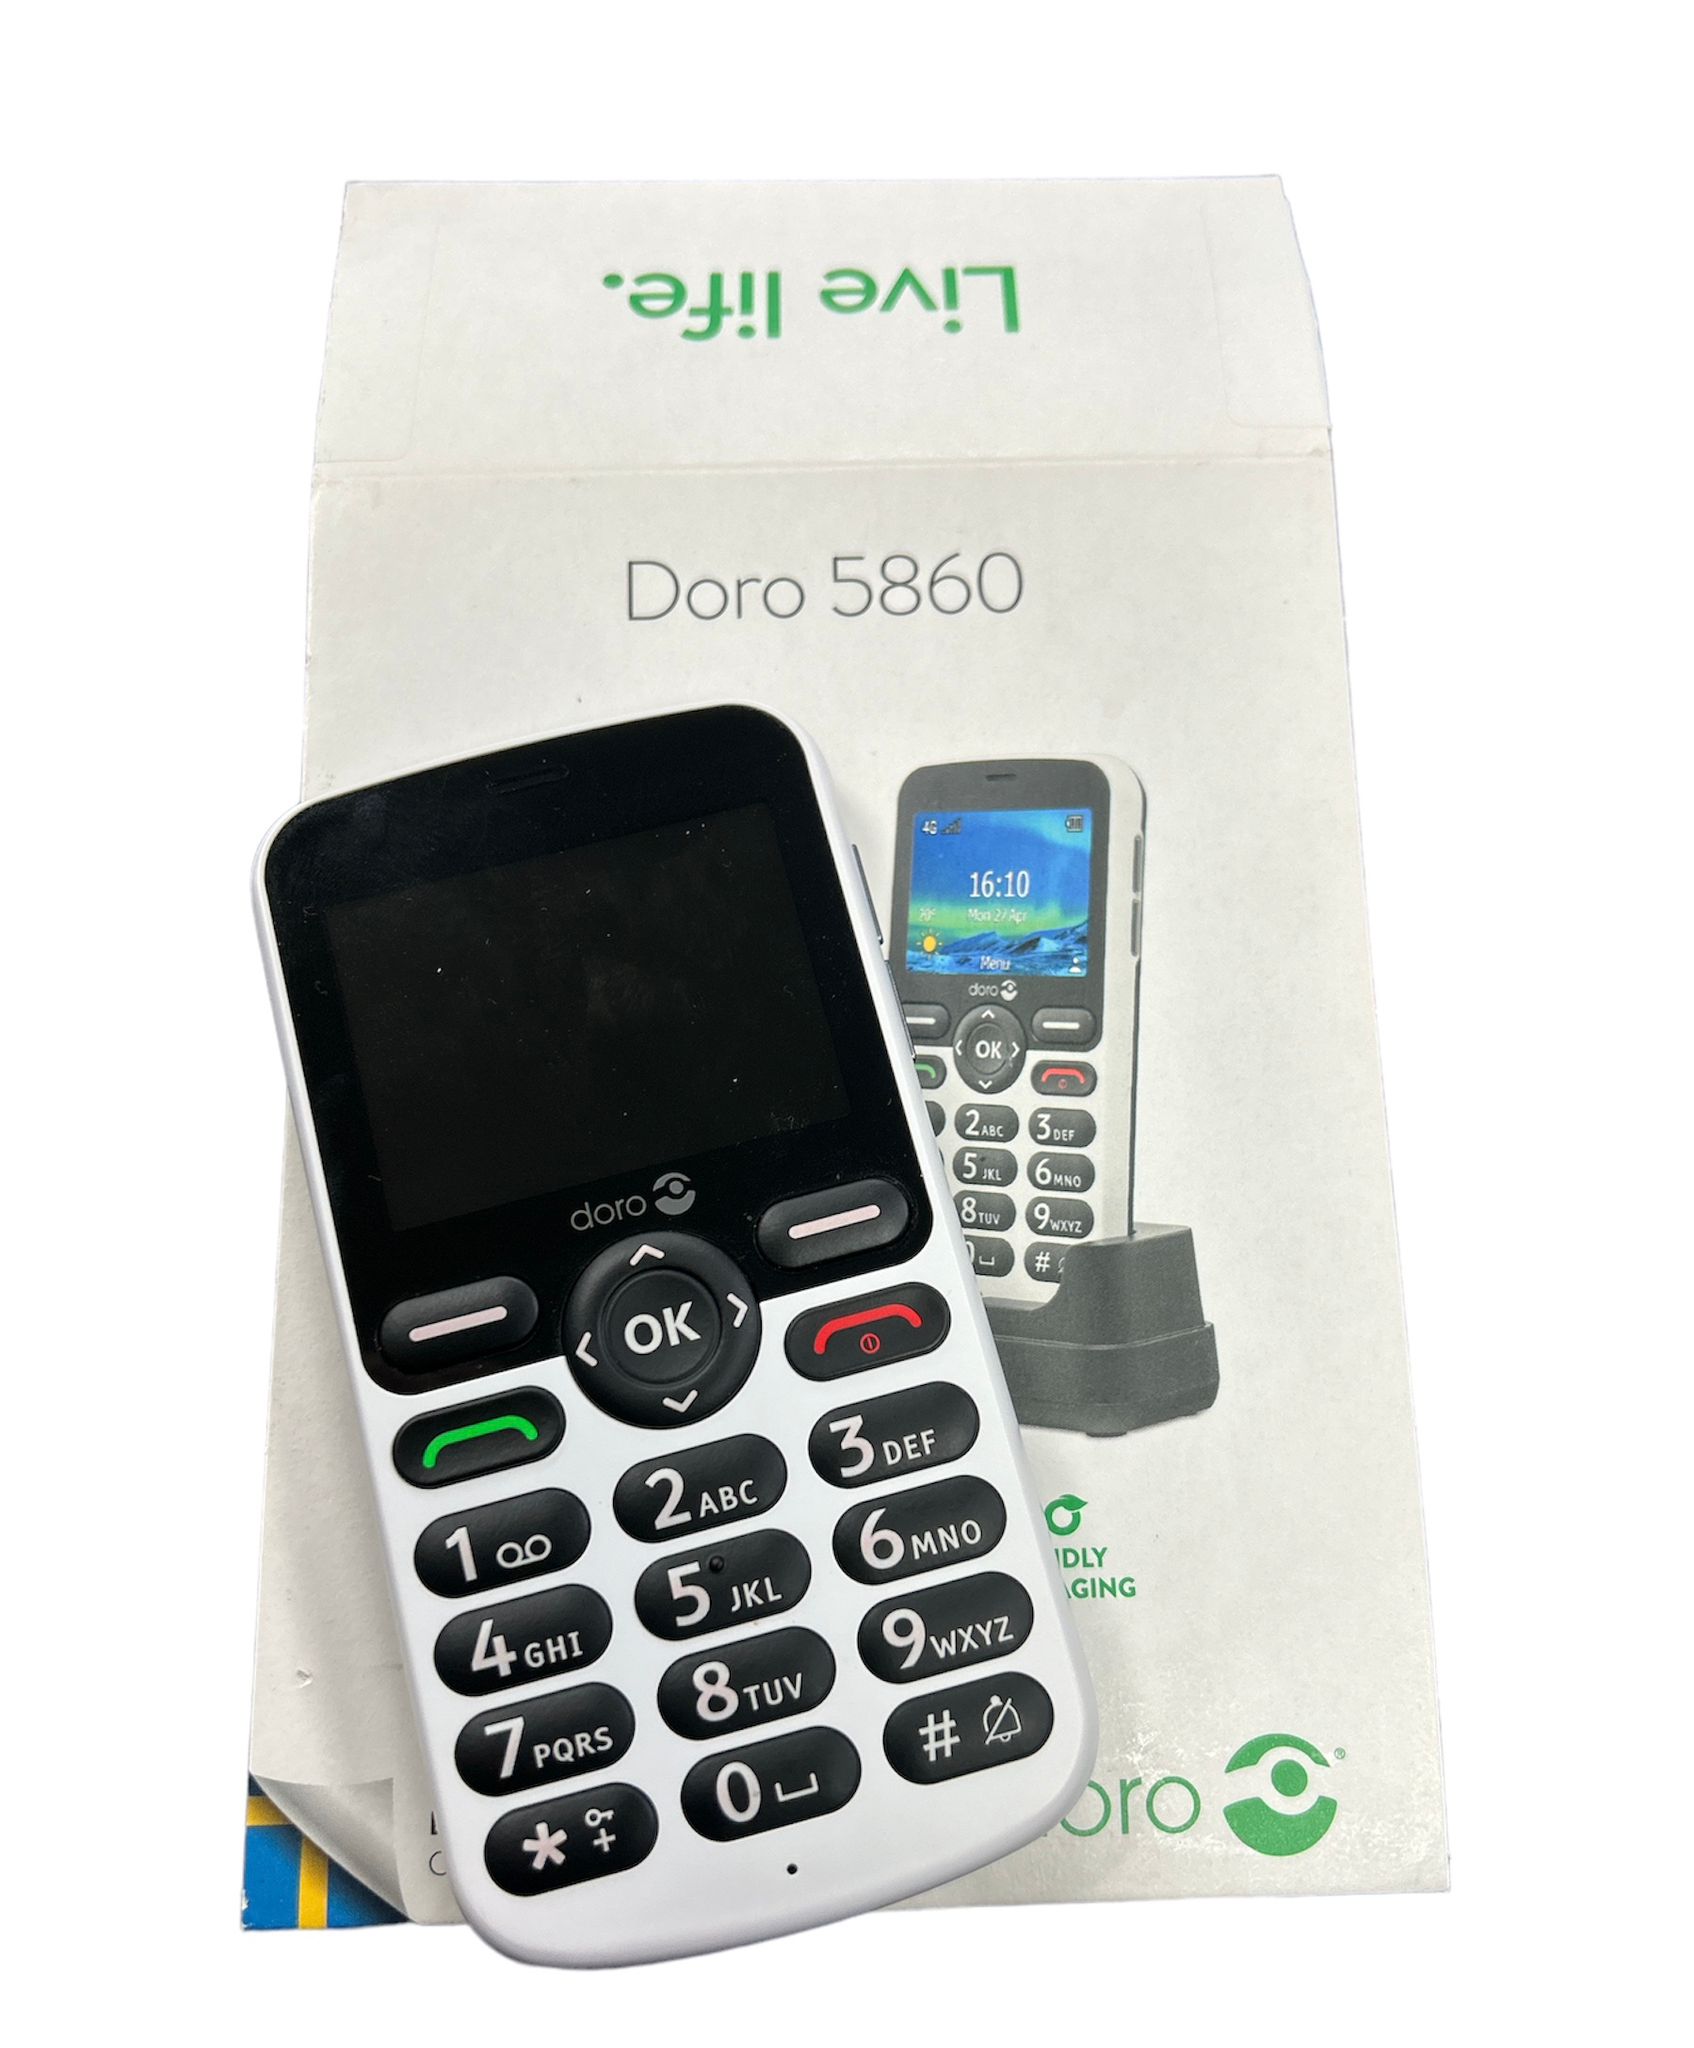 Doro 5860 - Boxed 